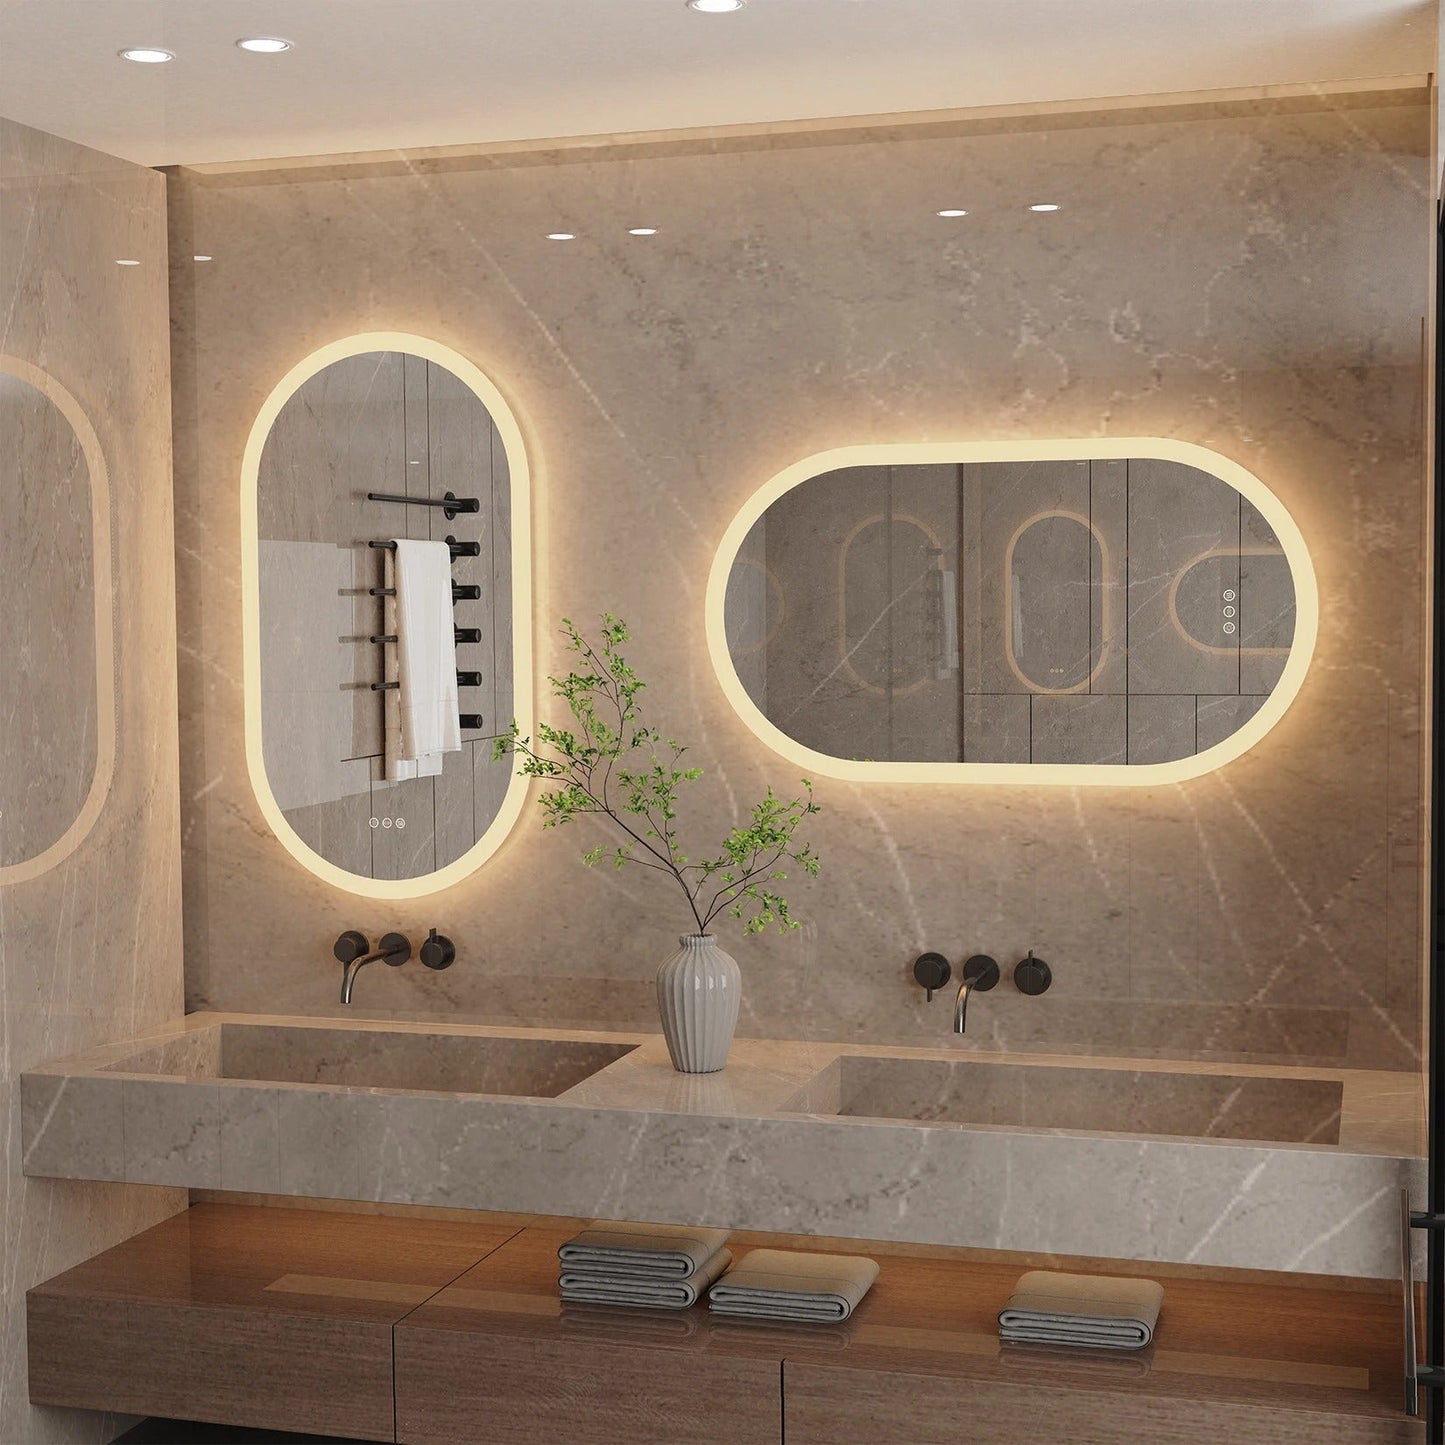 Extra large Backlit Light Oval Arched Large LED Makeup Bathroom Mirror, Anti-Fog, 3-Color Smart Mirrors